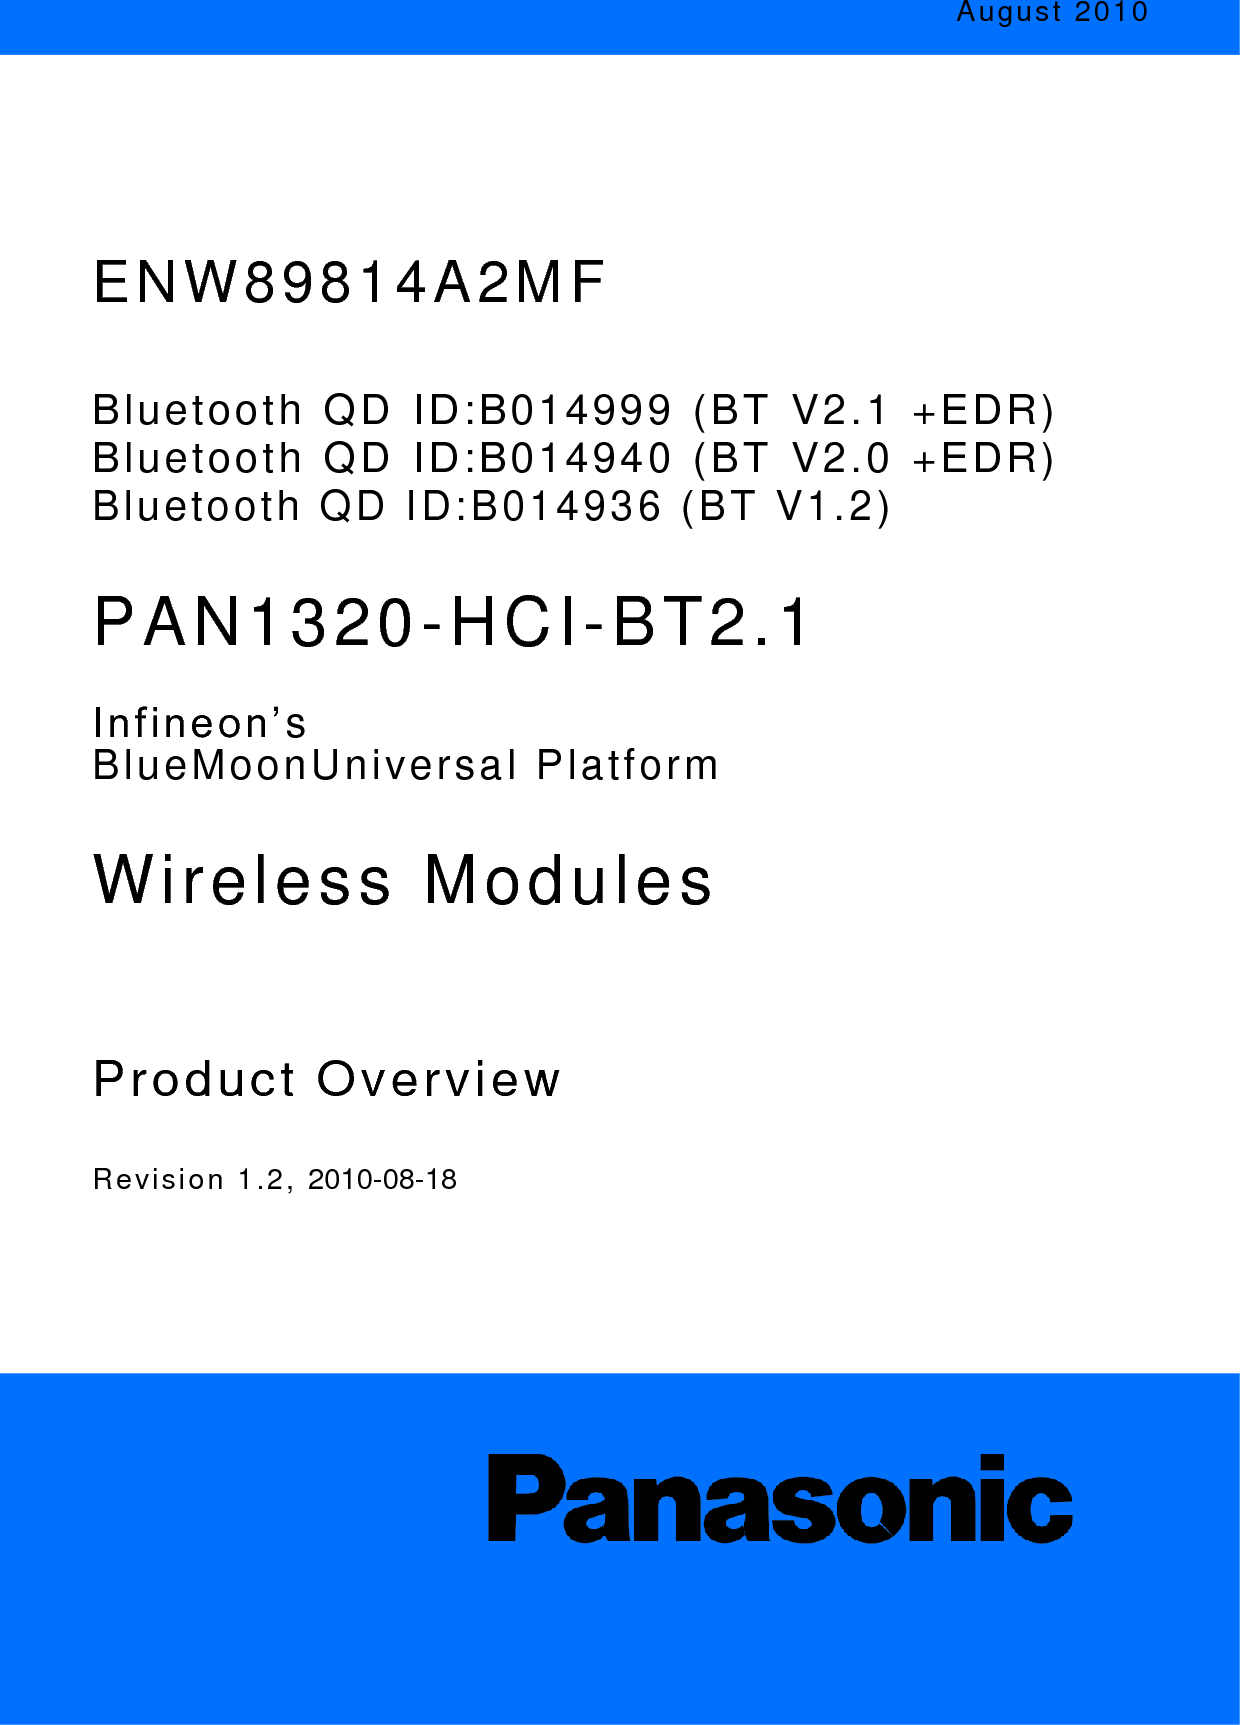 August  2010             ENW89814A2MF     Bluetooth  QD  ID:B014999  (BT  V2.1  +EDR) Bluetooth  QD  ID:B014940  (BT  V2.0  +EDR) Bluetooth  QD  ID:B014936  (BT  V1.2)     PAN1320-HCI-BT2.1    Infineon’s  BlueMoonUniversal  Platform     Wireless  Modules        Product  Overview     R e v i s i o n 1 . 2 ,  2010-08-18                   